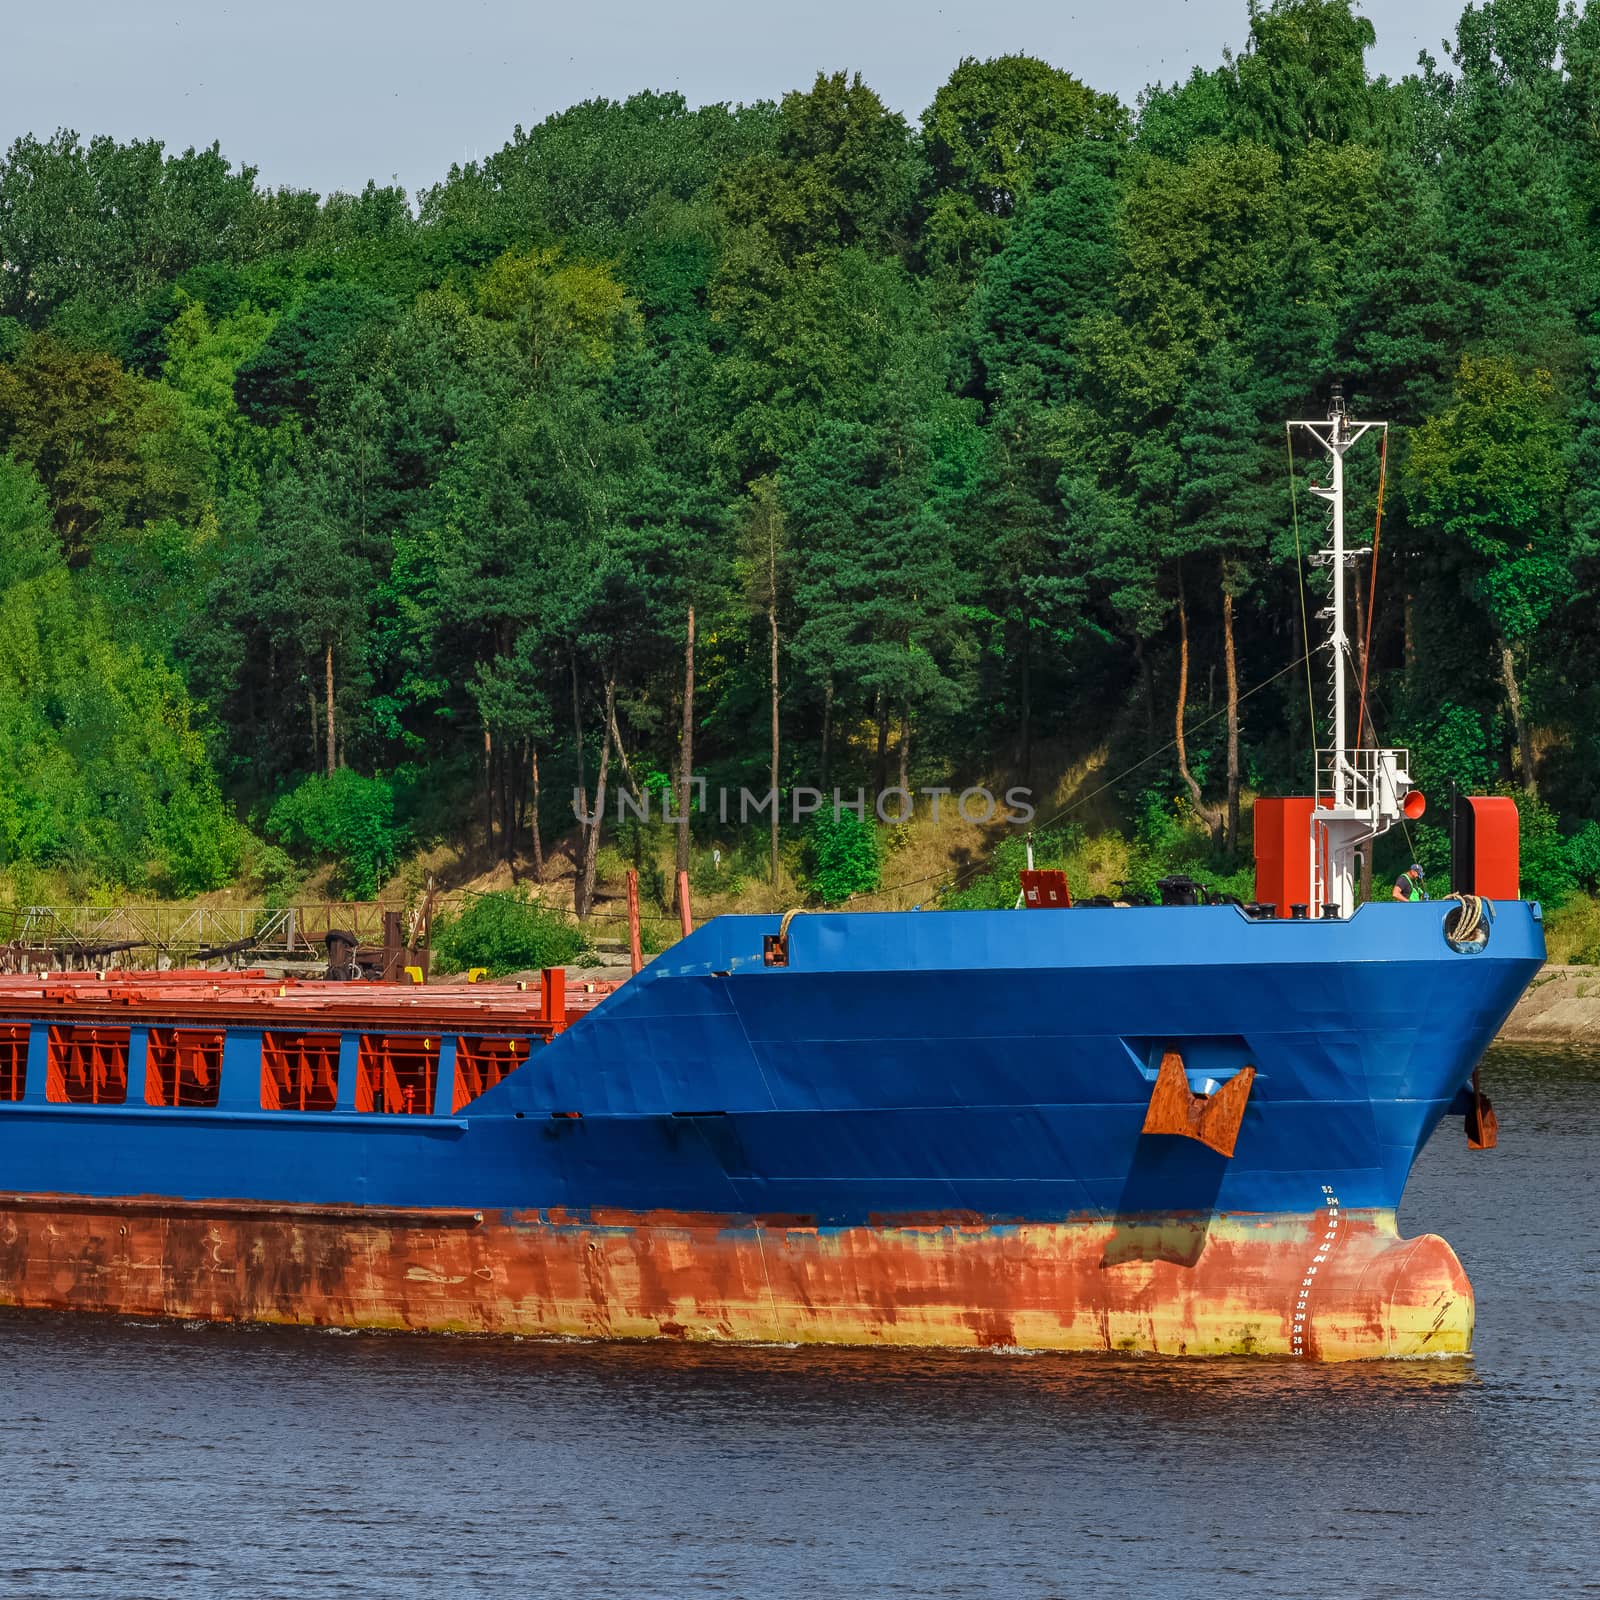 Blue cargo ship by sengnsp